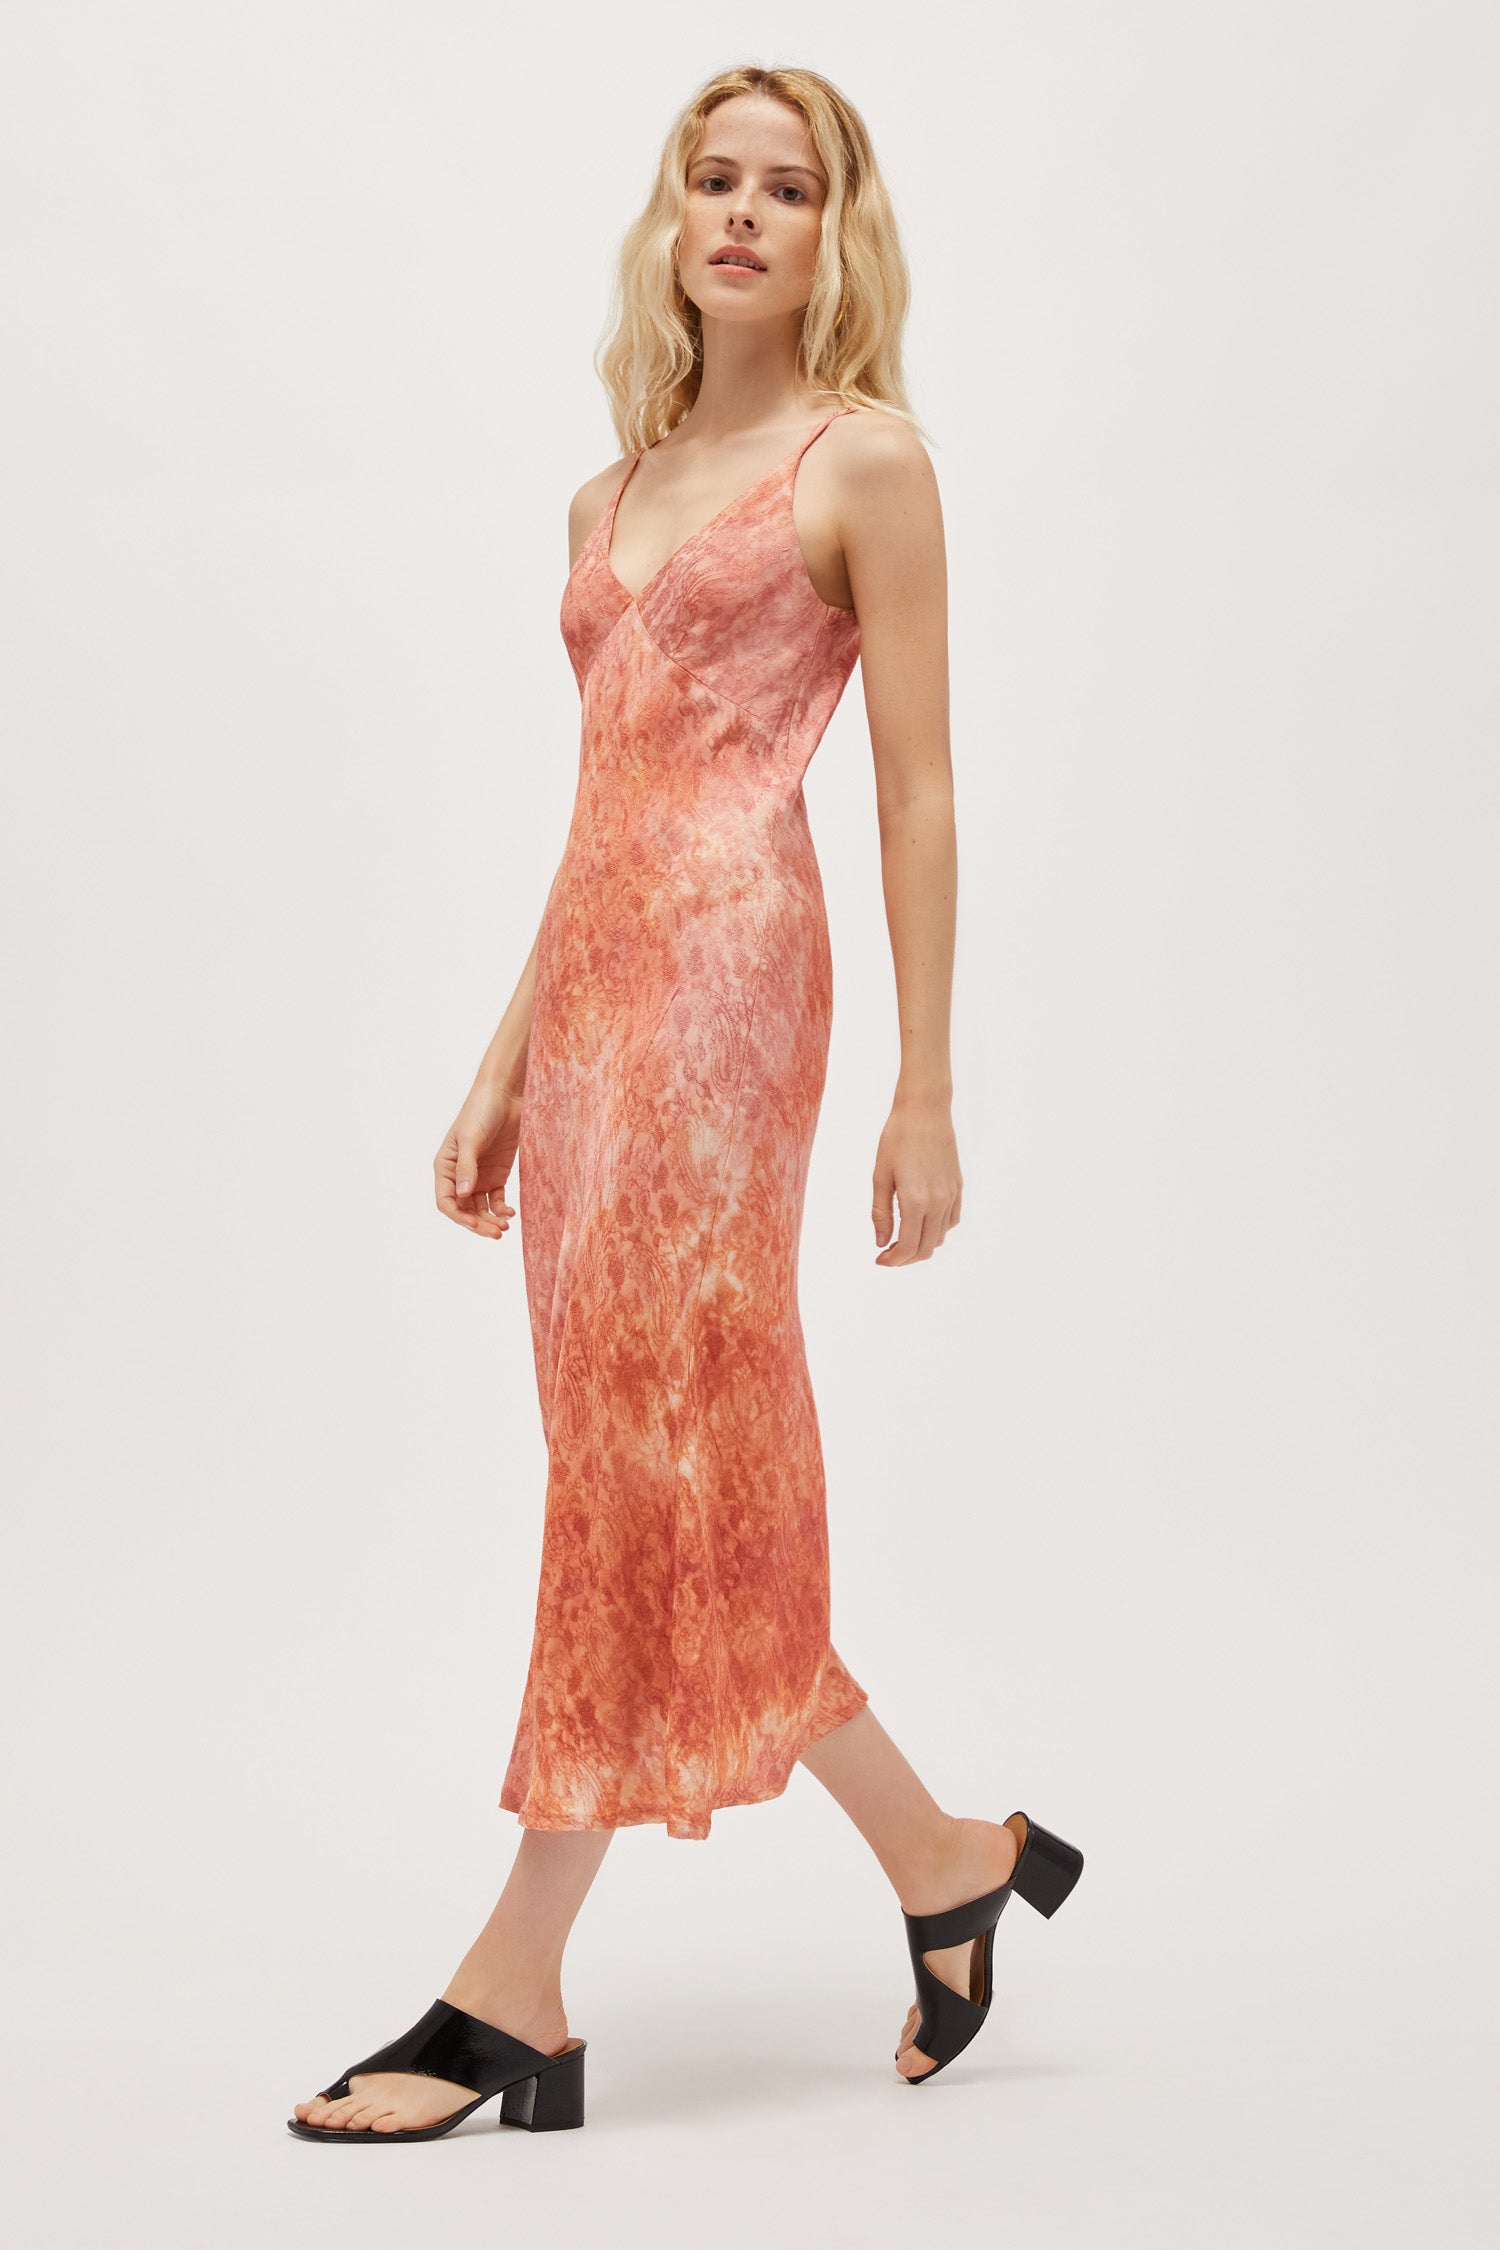 coral slip dress